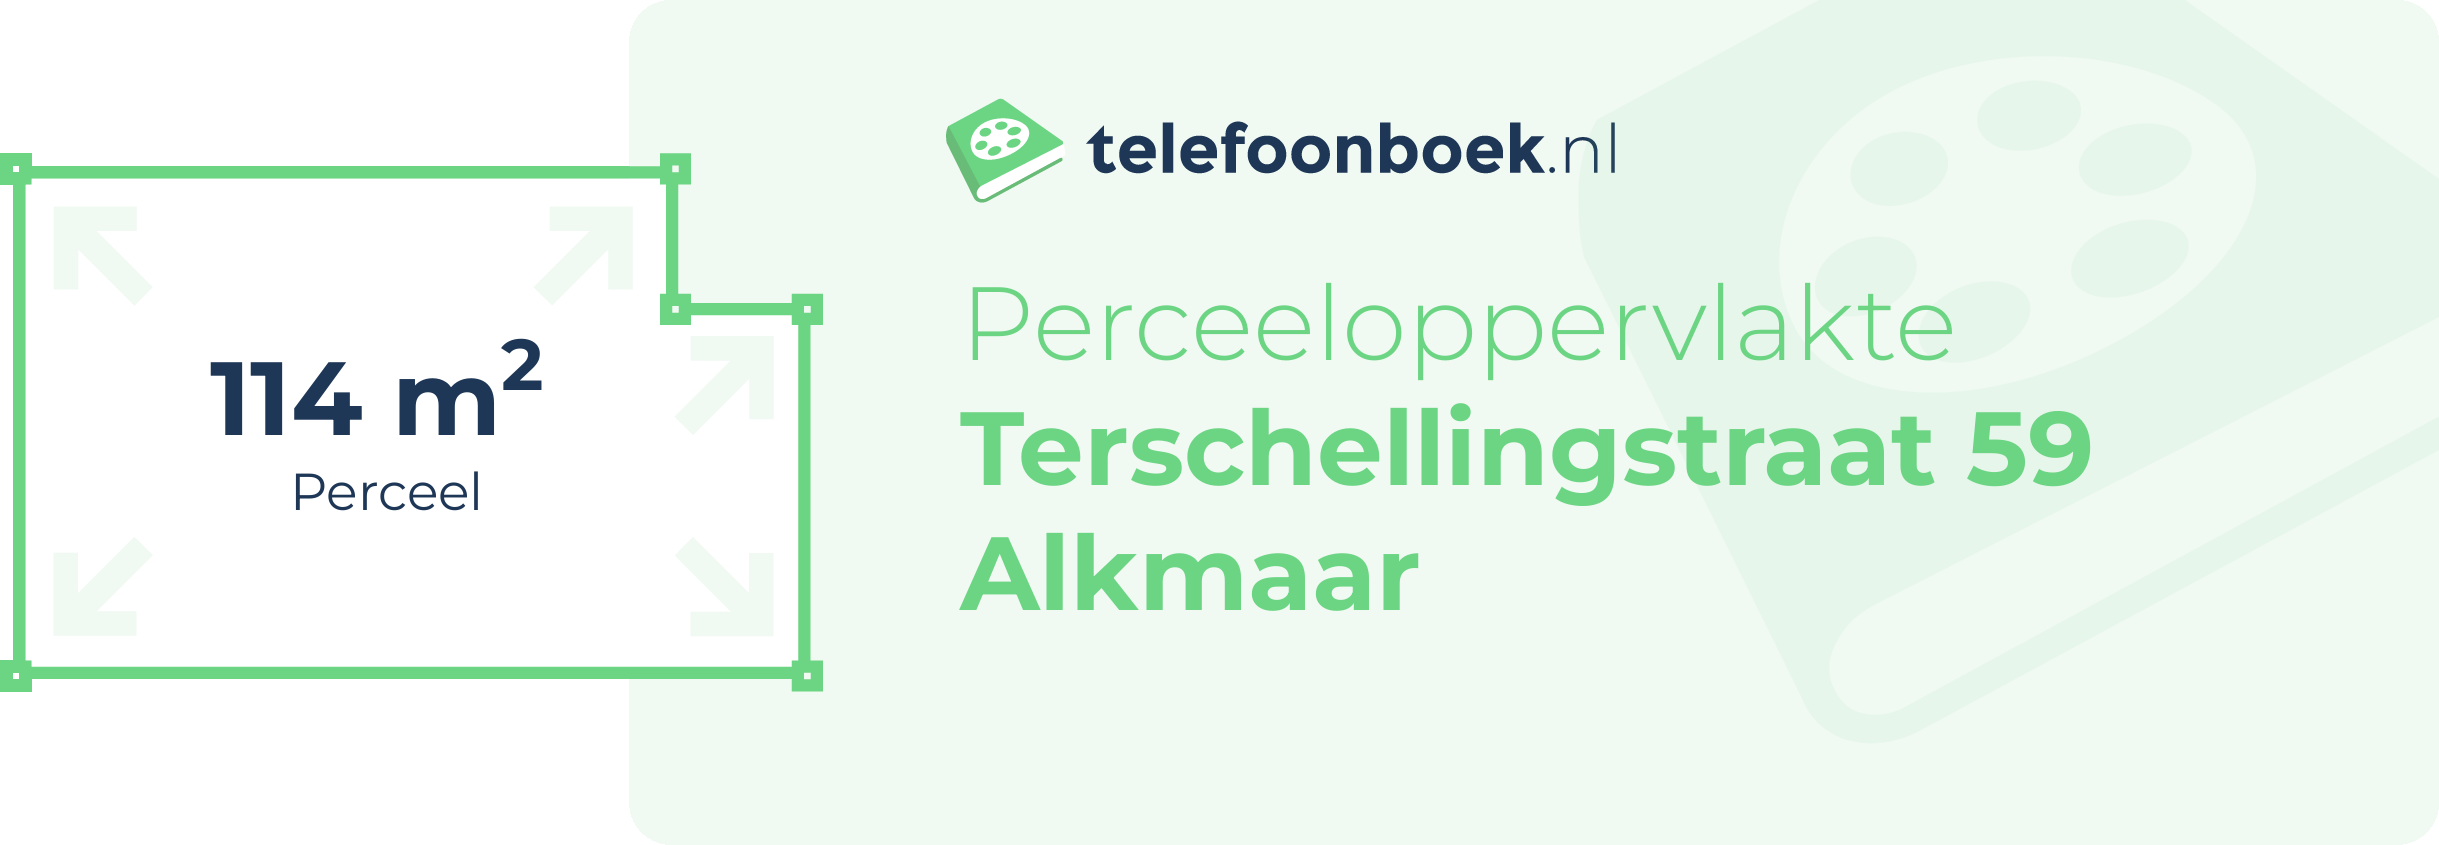 Perceeloppervlakte Terschellingstraat 59 Alkmaar